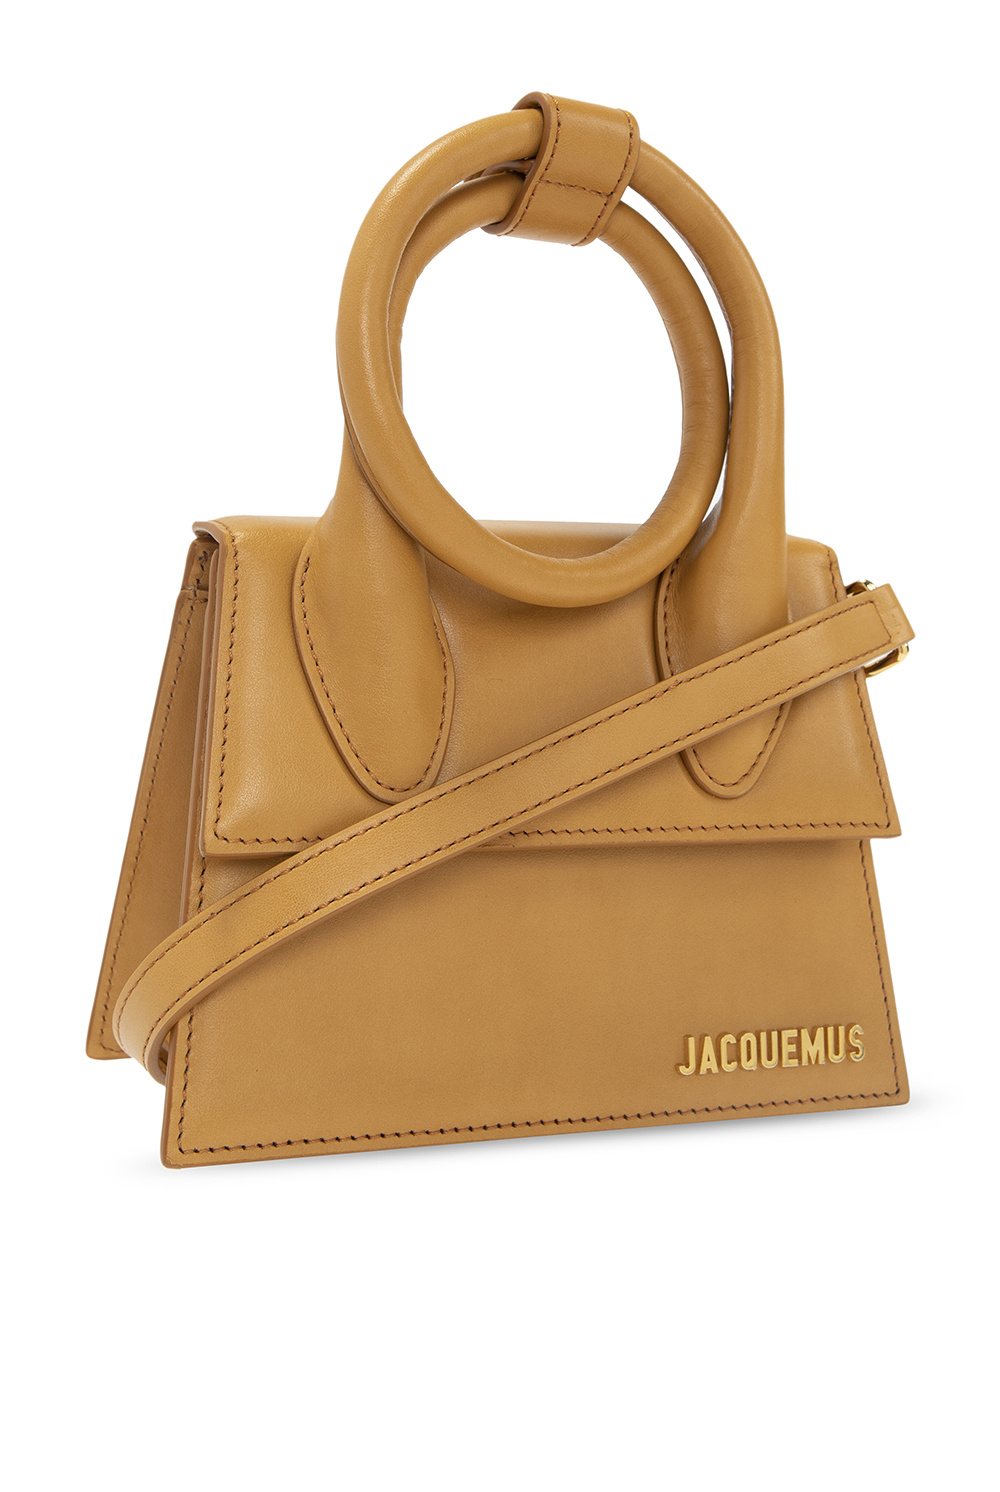 Jacquemus Mustard Suede Le Chiquito Top Handle Bag Jacquemus